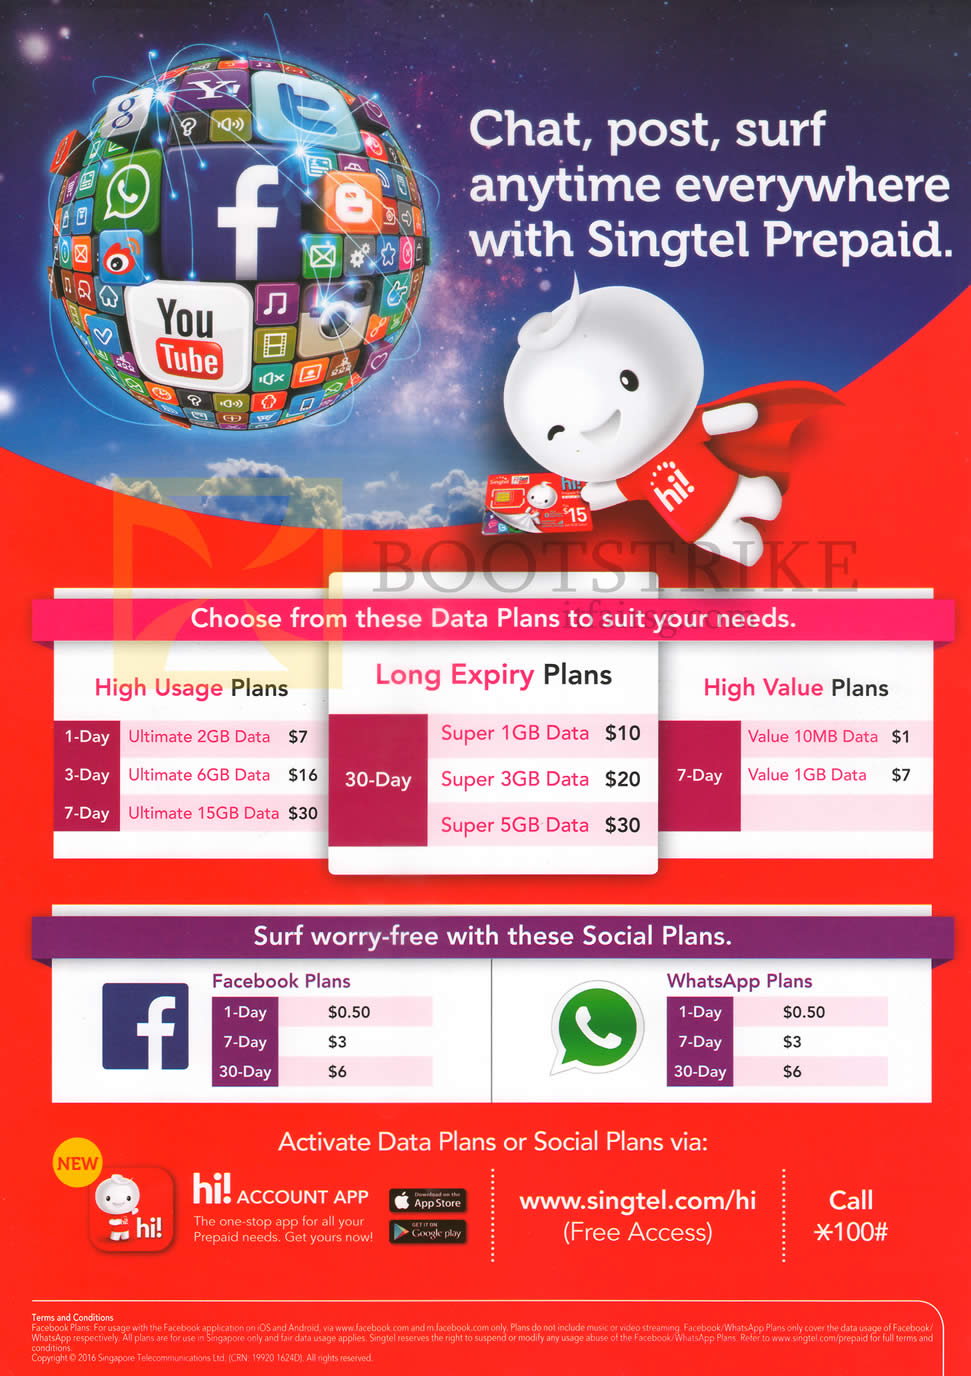 IT SHOW 2016 price list image brochure of Singtel Prepaid Data Plans High Usage, Long Expiry, High Value, Facebook Plans, WhatsApp Plans